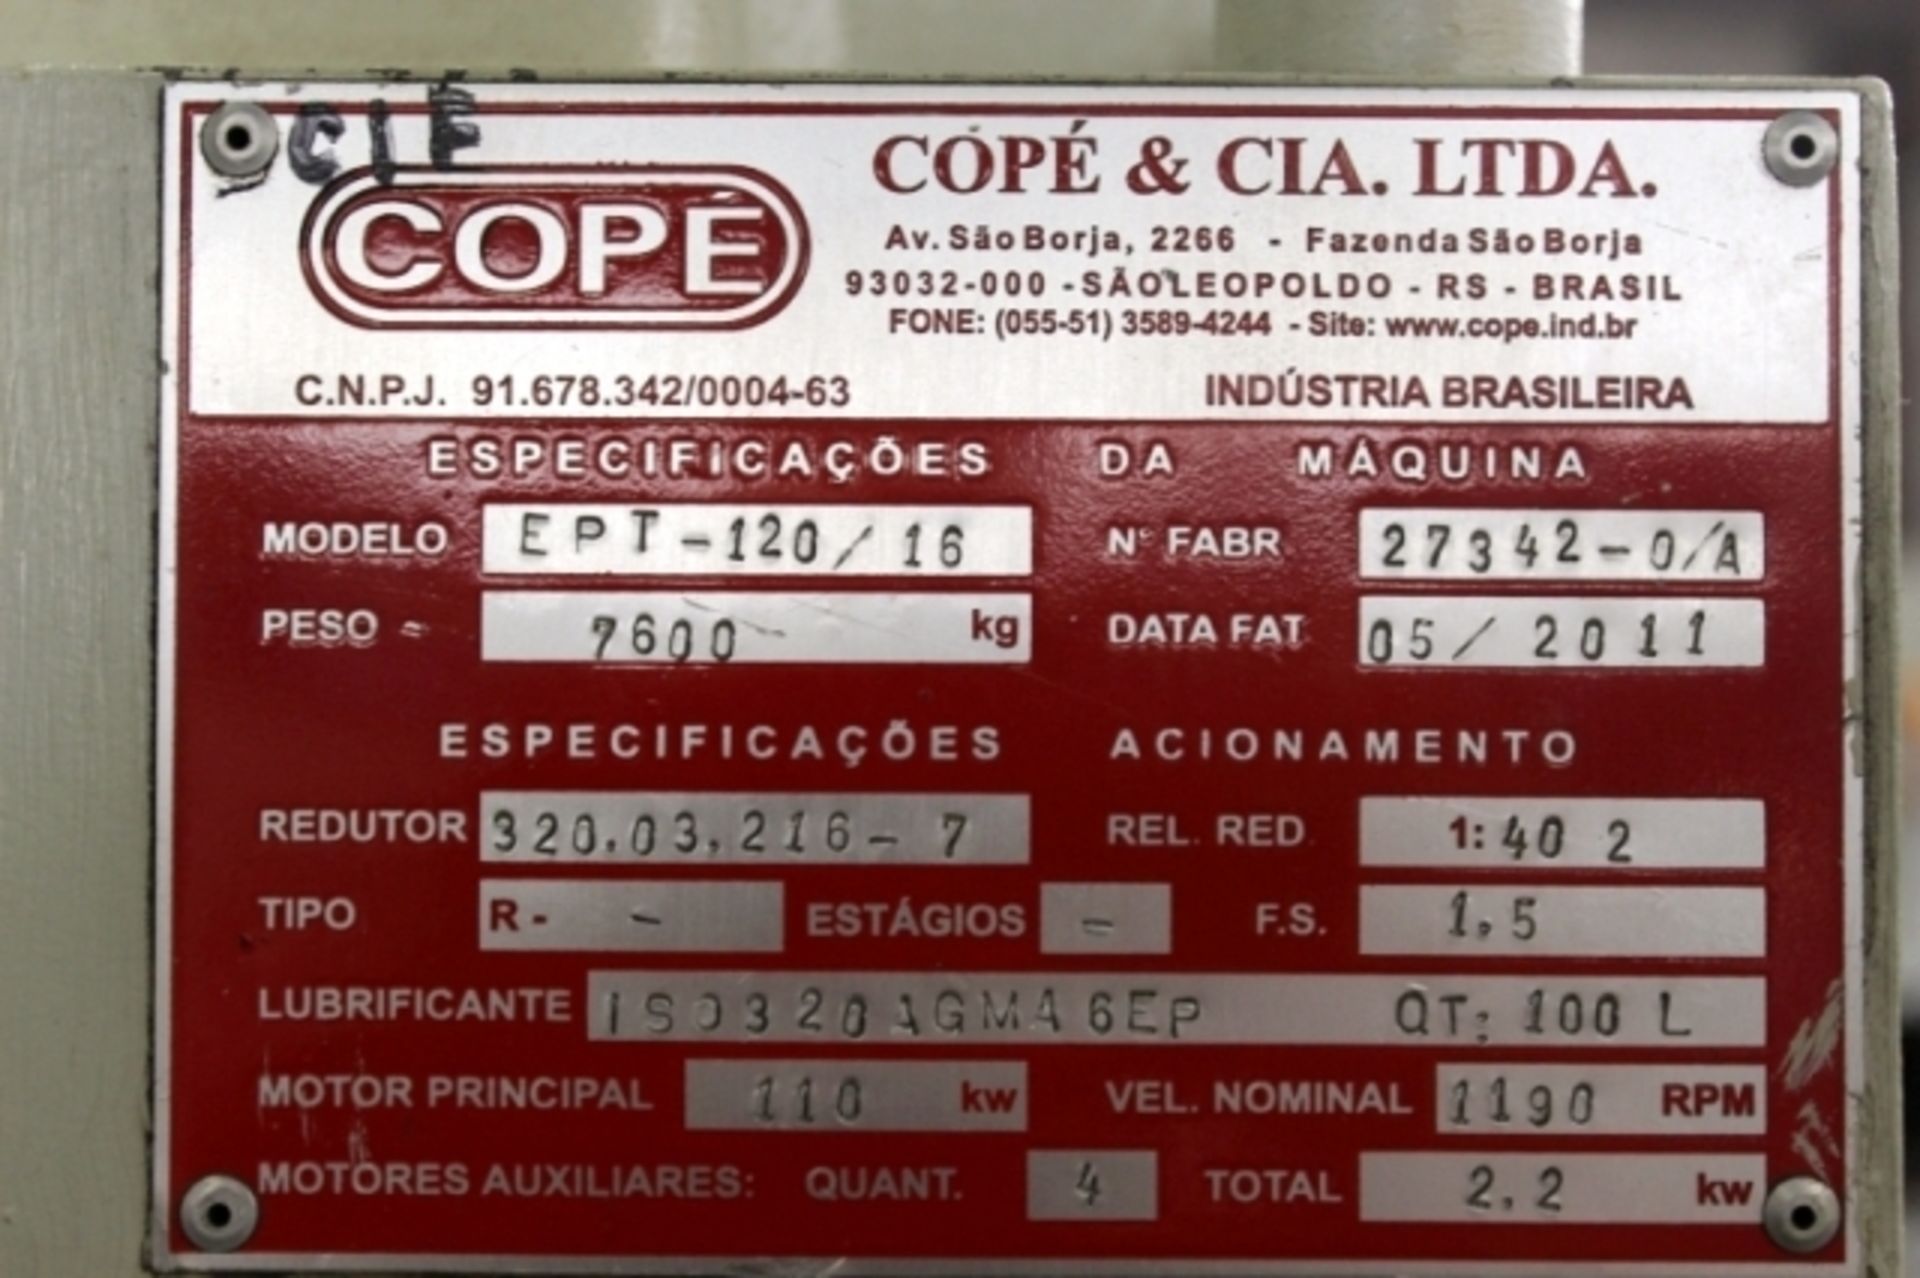 Cope EPT-120/16 Extruder, 4.7” diam., A-B PLC control, 16:1 L/D, 8000 kg, 1:40.2, 200 HP, New 2011 - Image 9 of 15